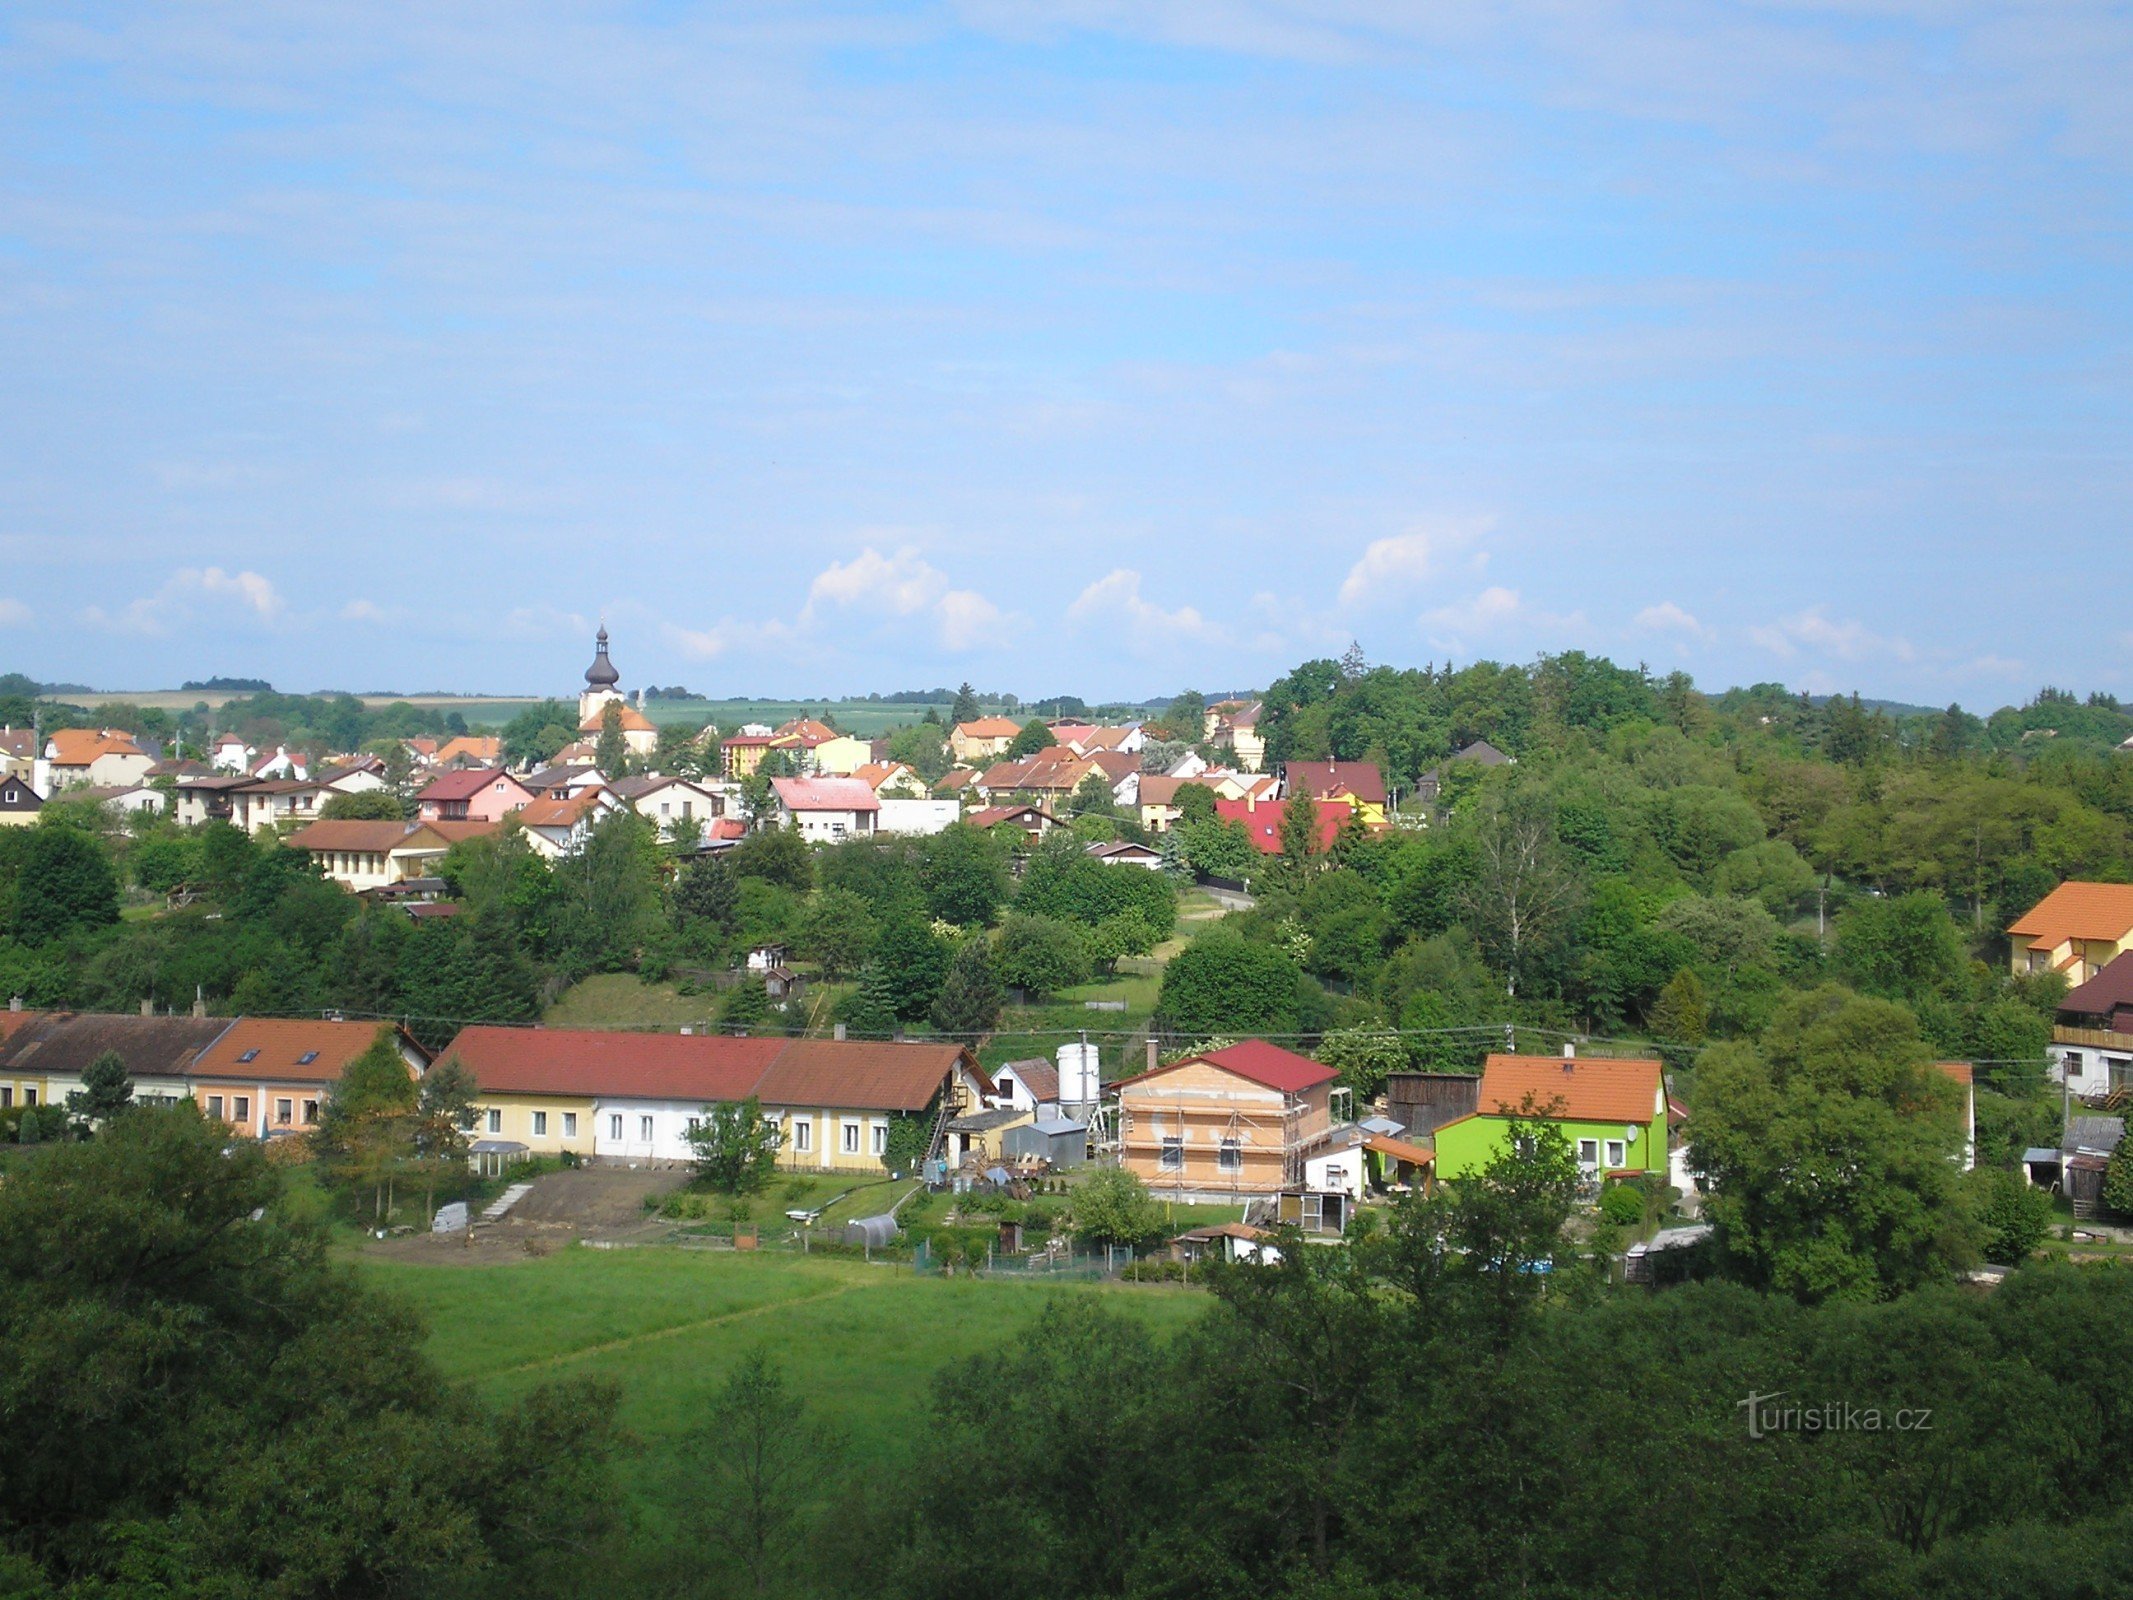 City of Kladruby